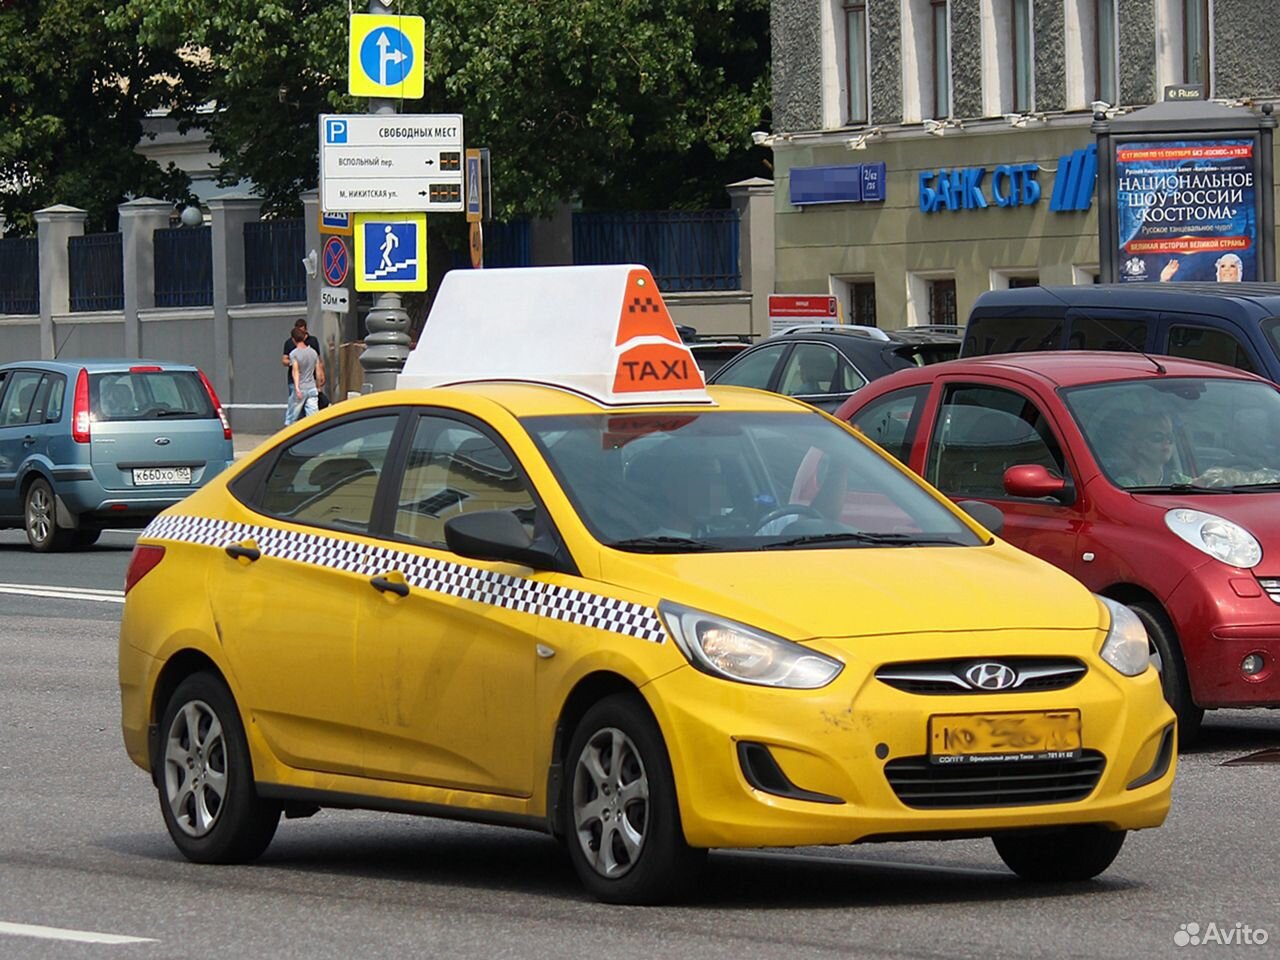 Номера с желтым регионом. Желтые номера такси. Солярис такси. Номера машин такси. Желтые номера на машине.